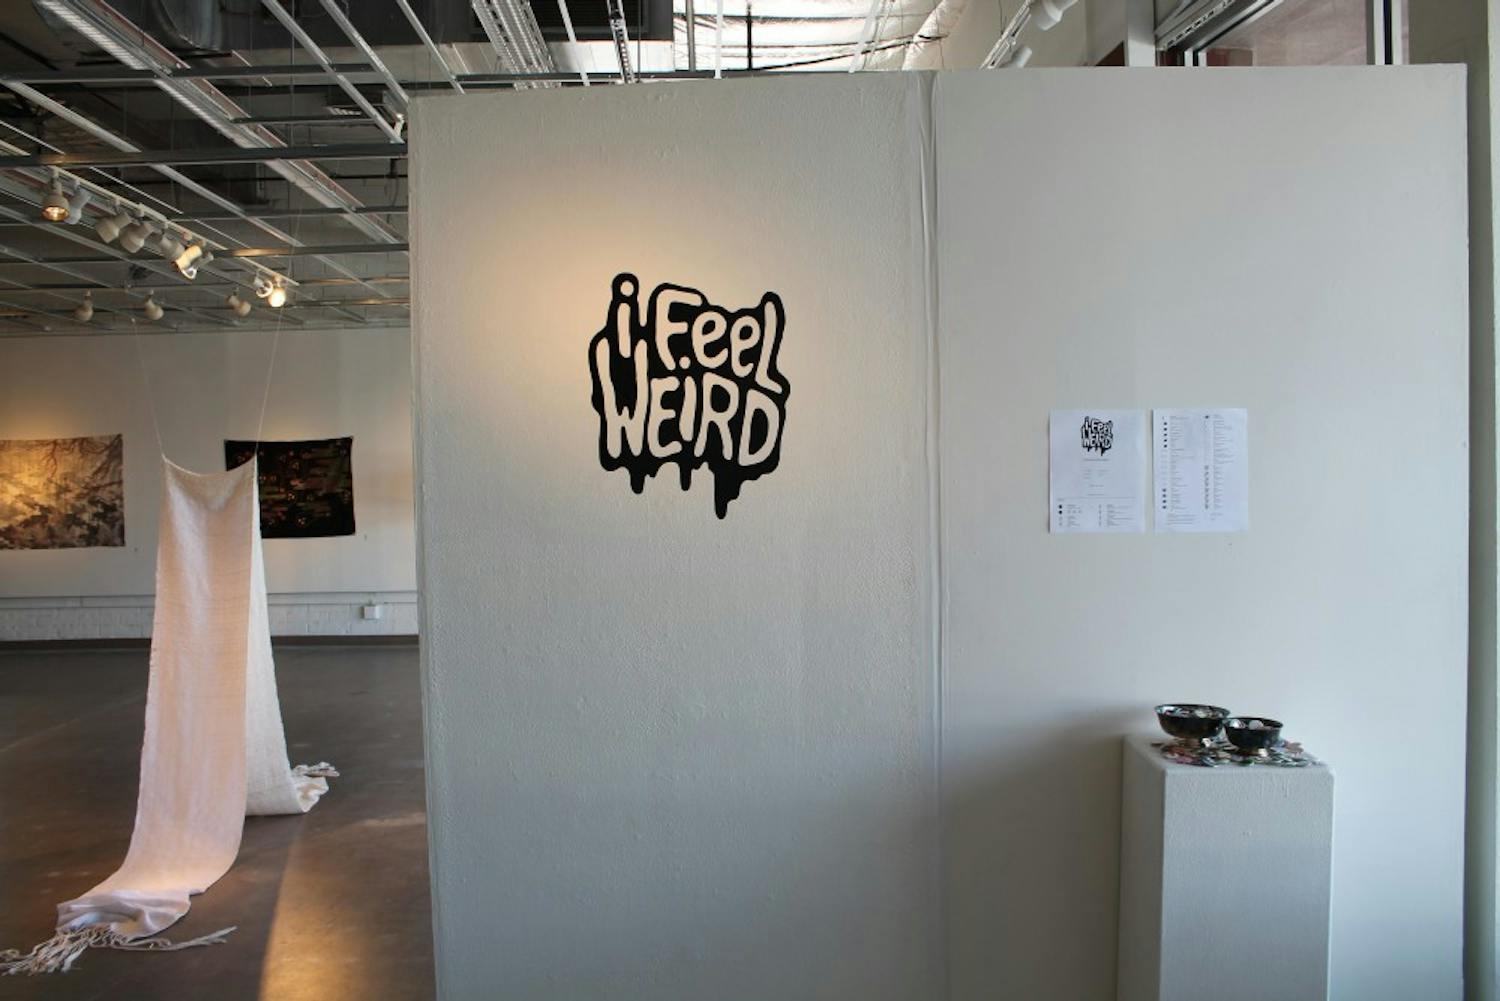 "I Feel Weird" show brings studio art to ASU